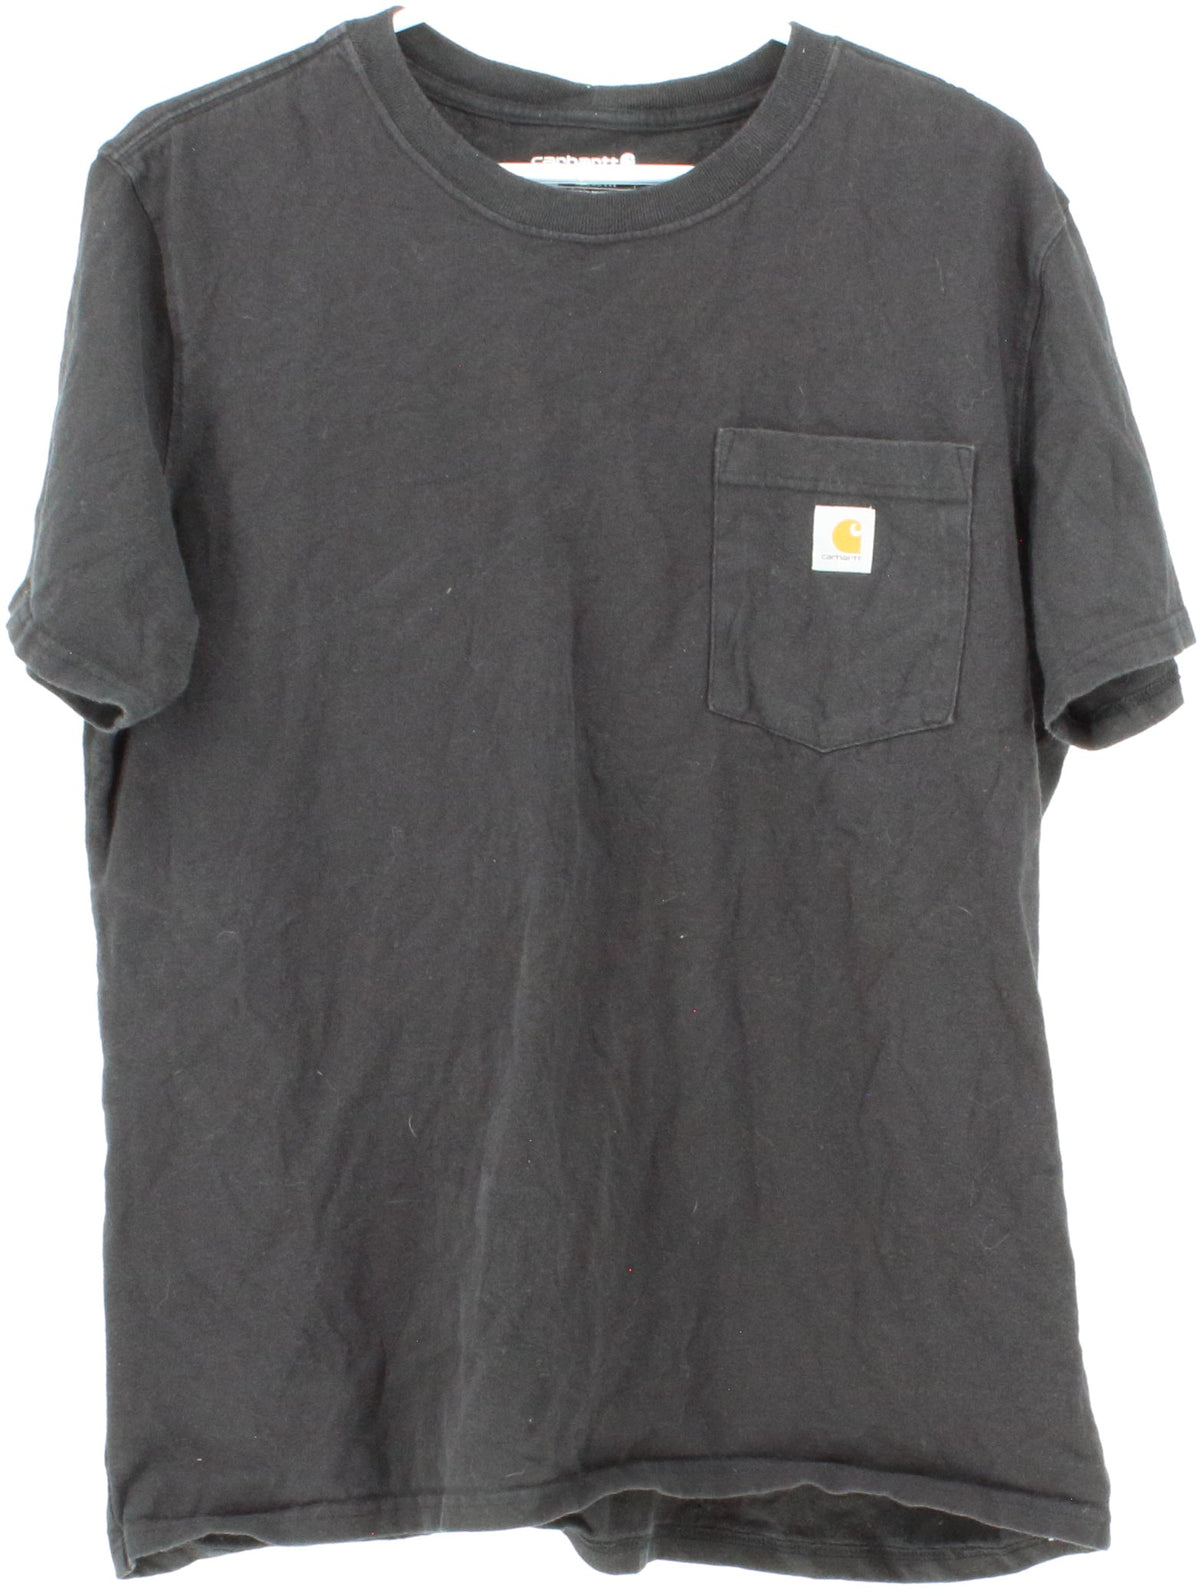 Carhartt Loose Fit Front Pocket Black Children's T-Shirt